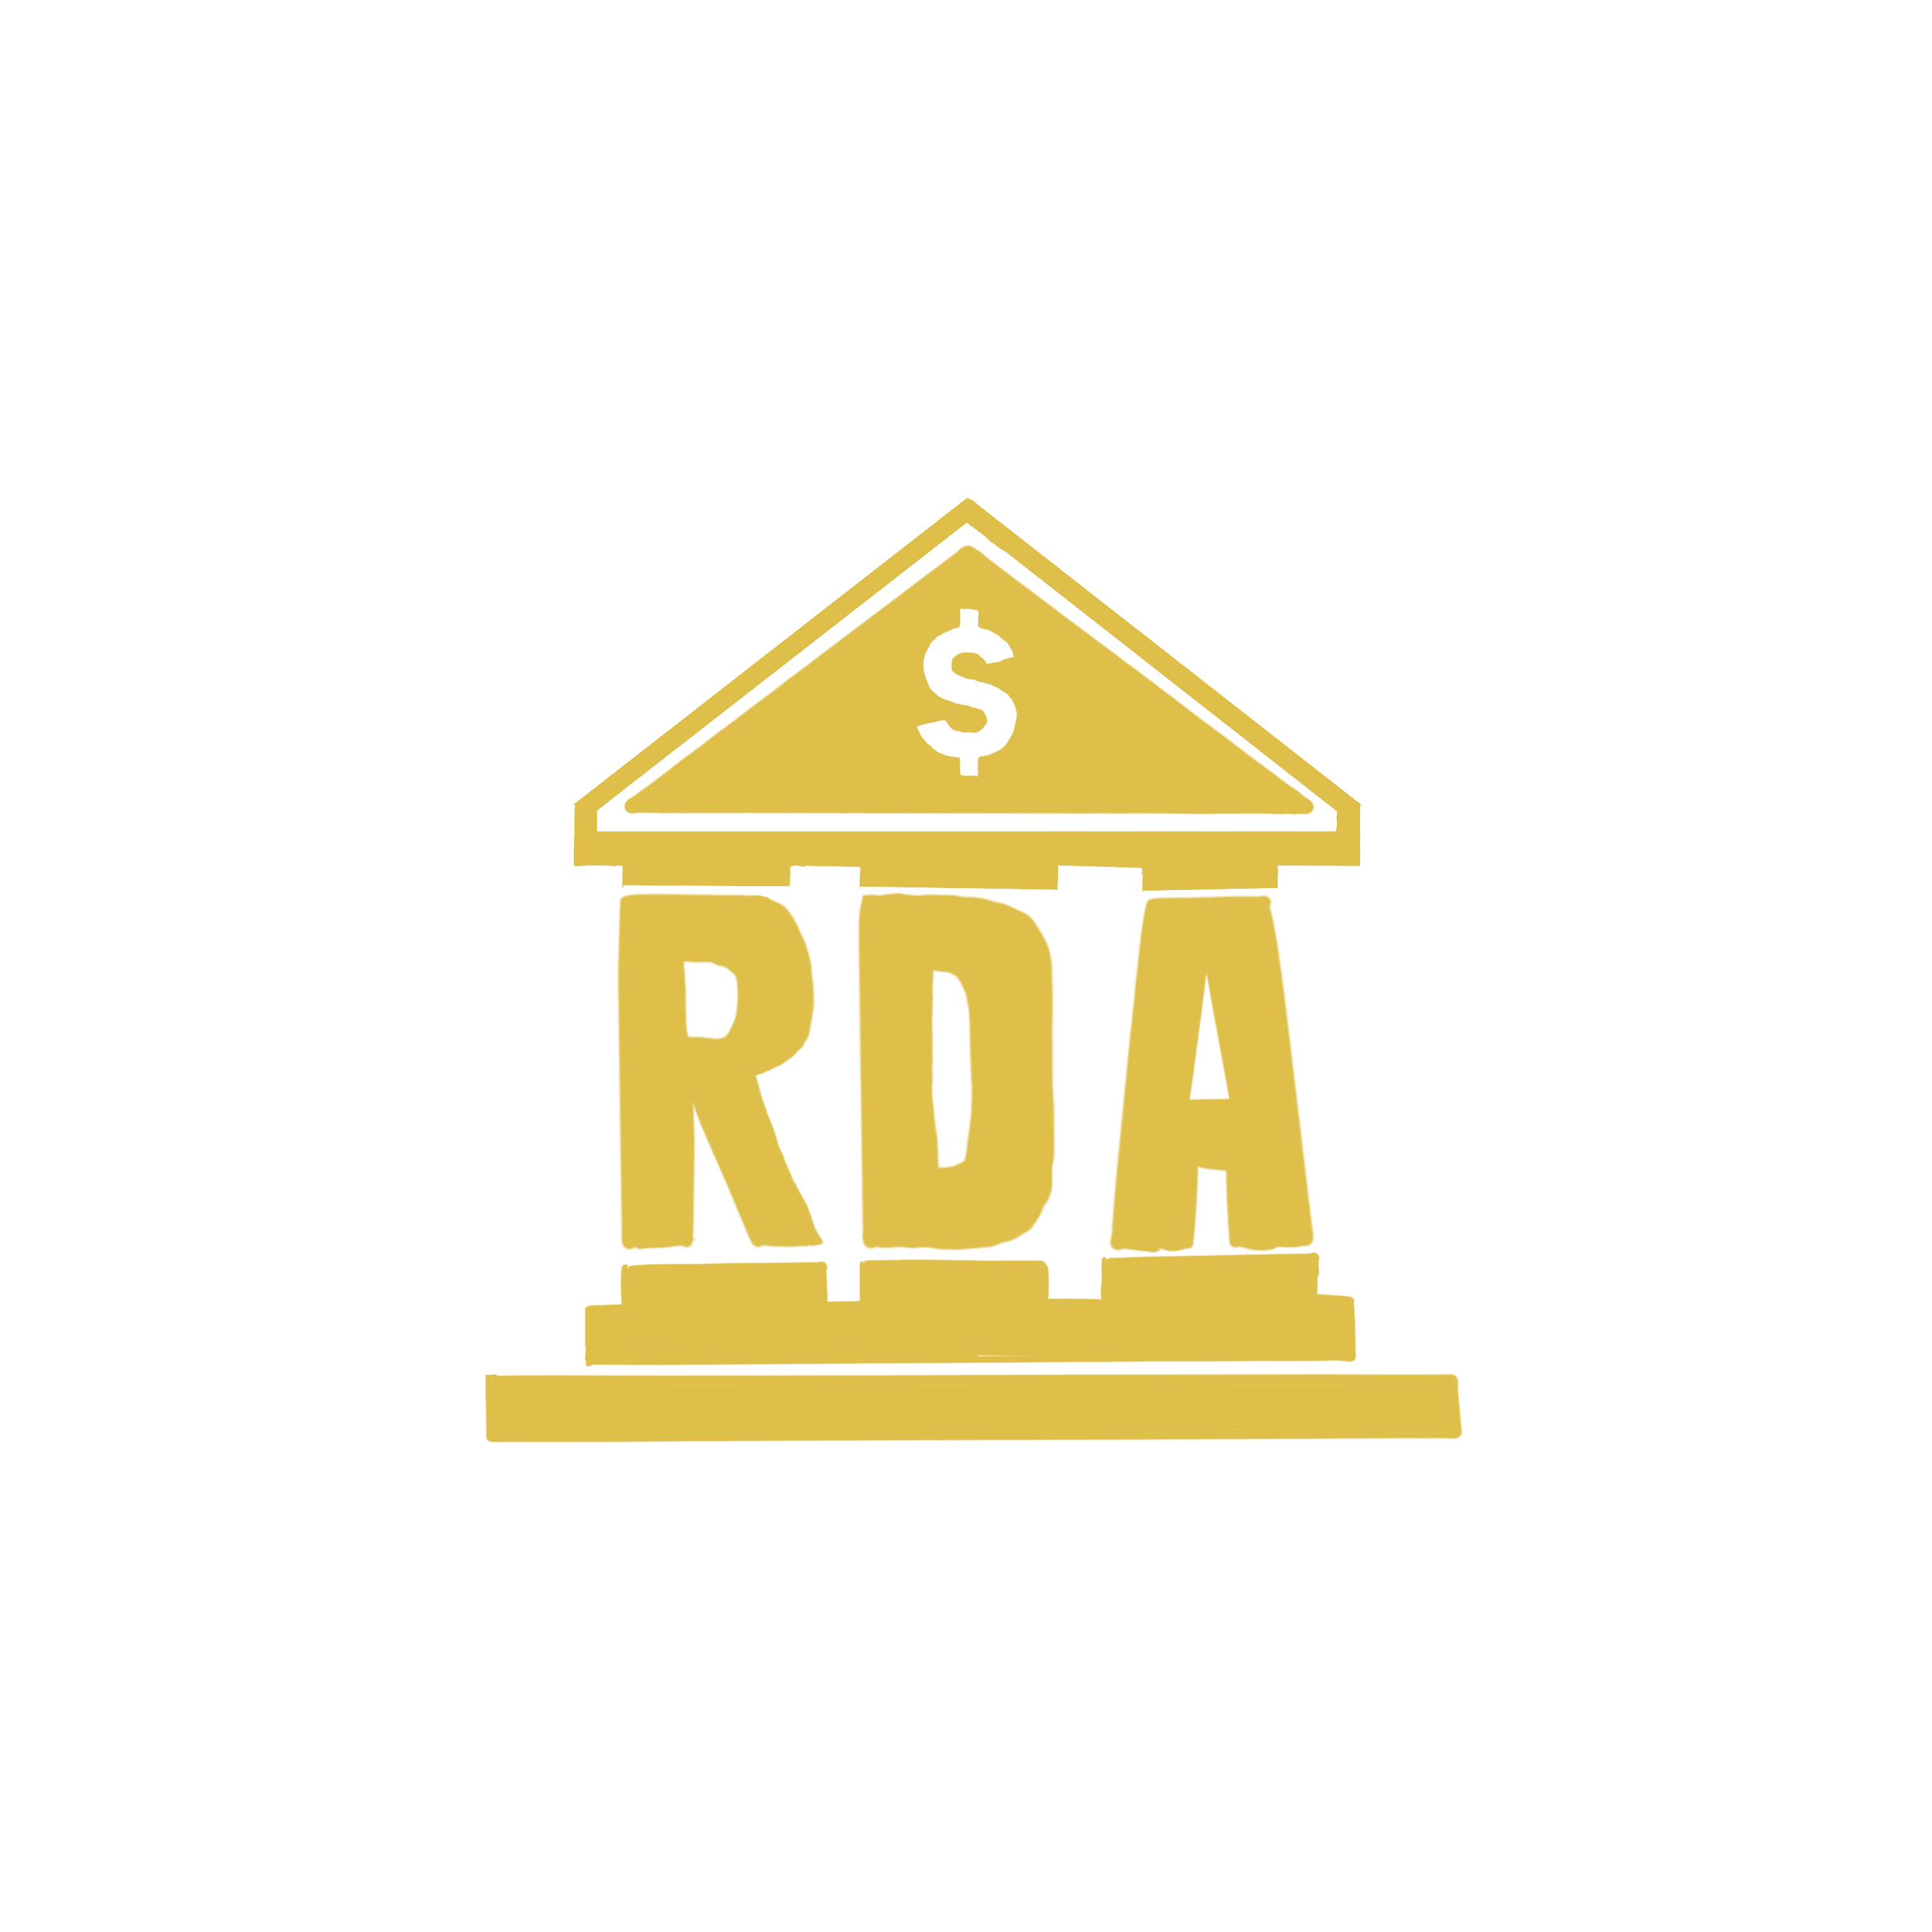 [XCL] RDA Bank